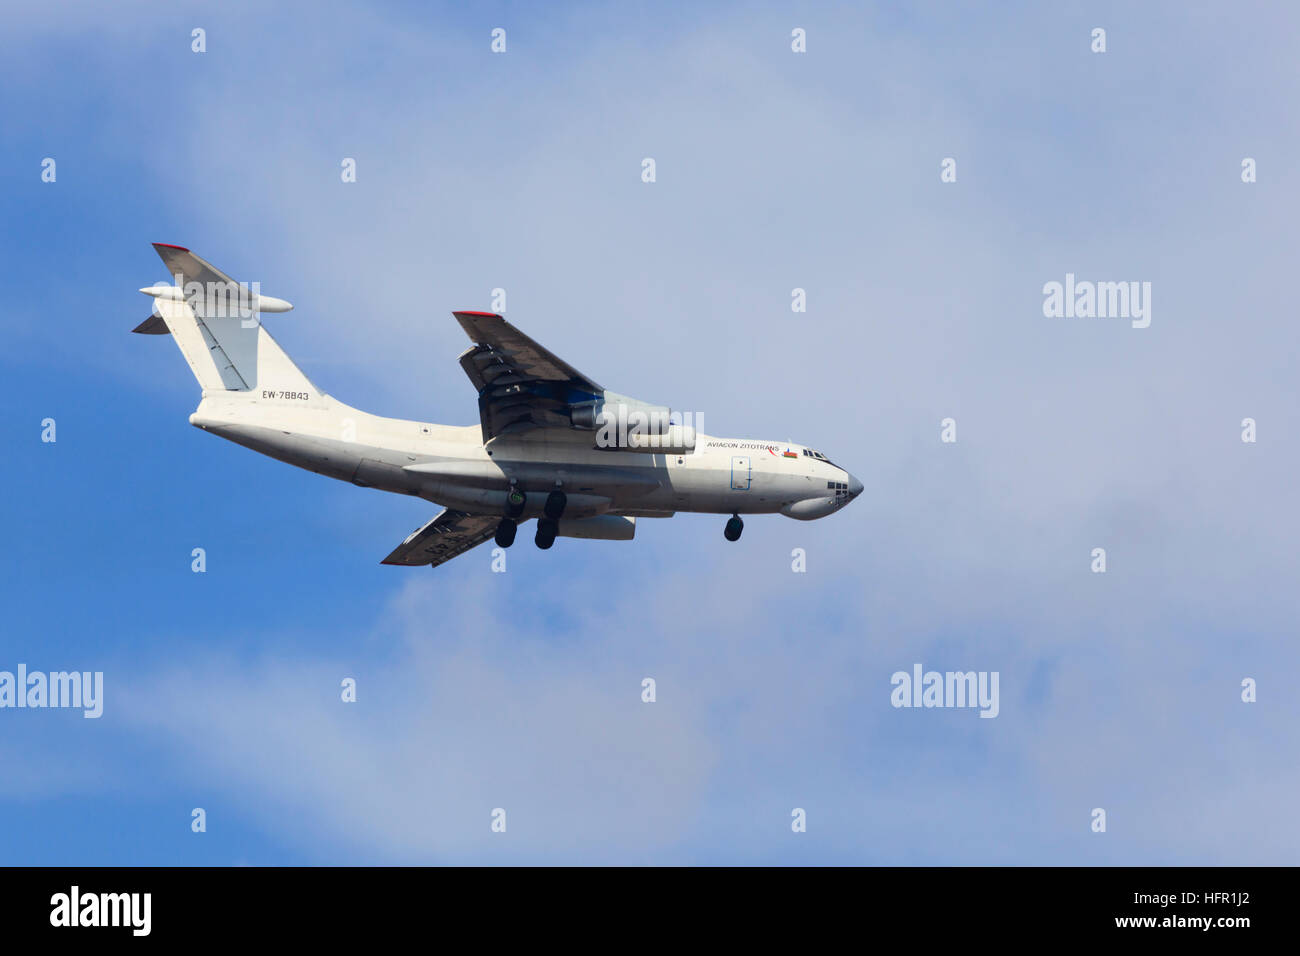 Ilushin IL76TD, EW-78843, Transaviaexport Fluggesellschaft, Landung in Larnaca, Zypern. Stockfoto